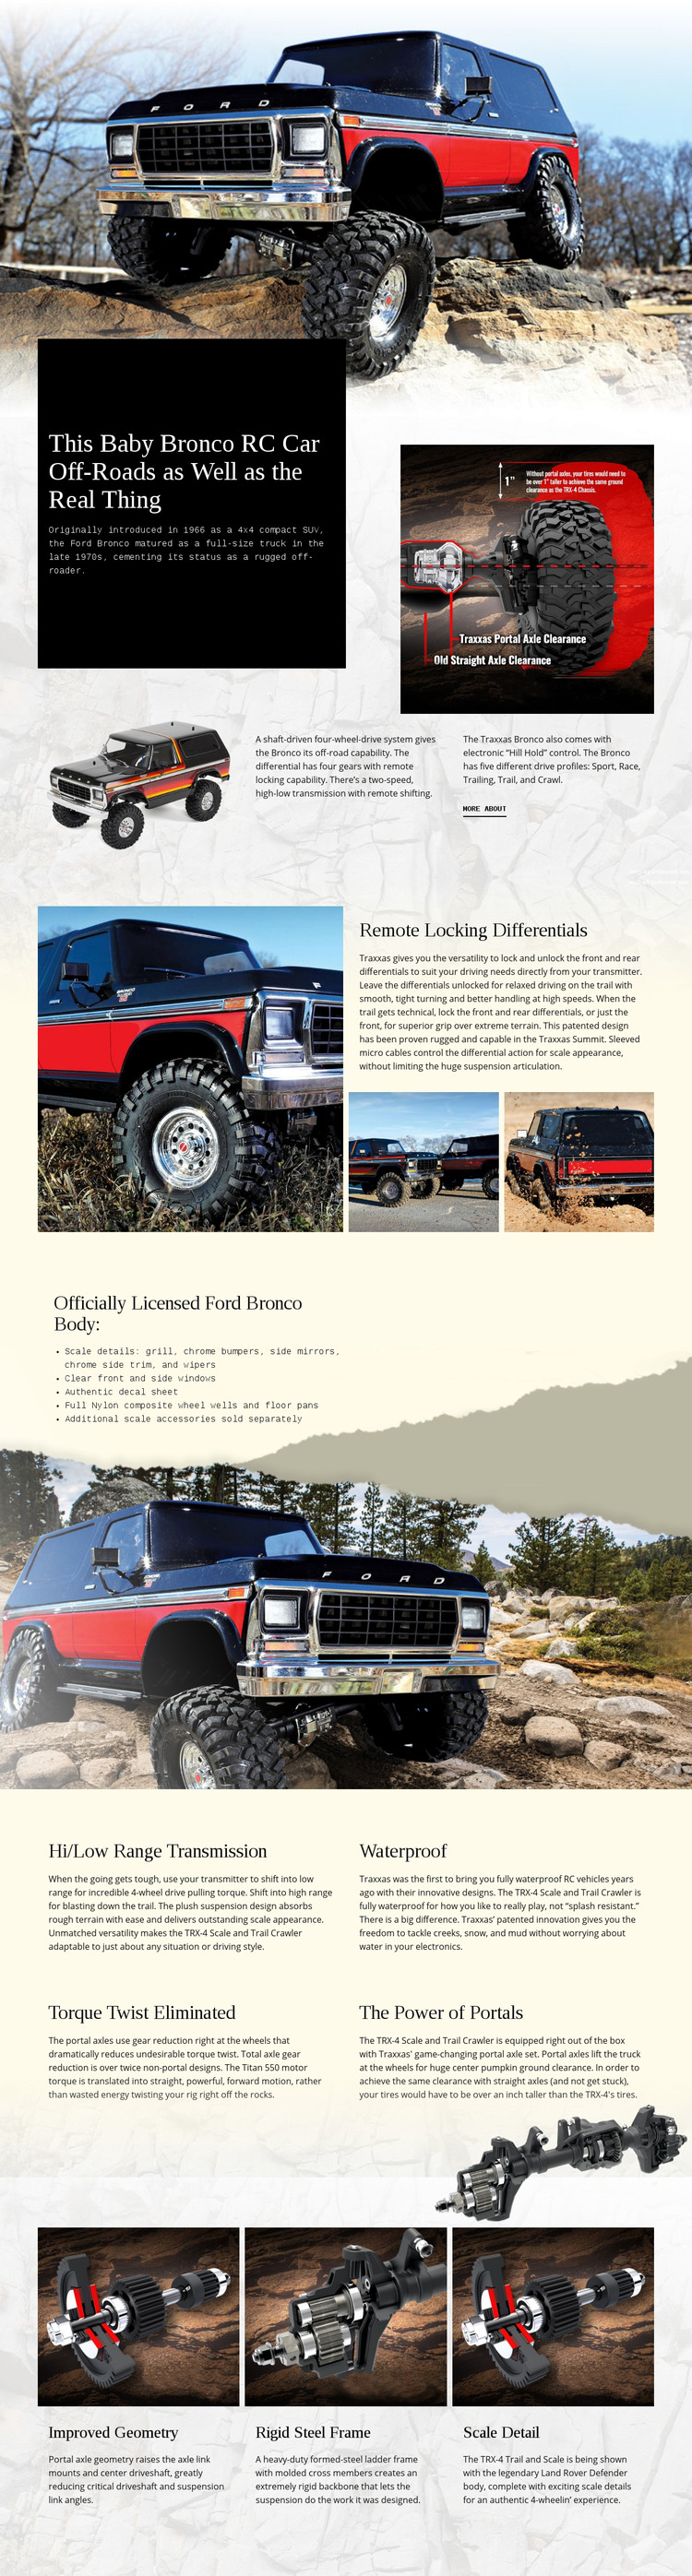 Bronco Rc Car Homepage Design